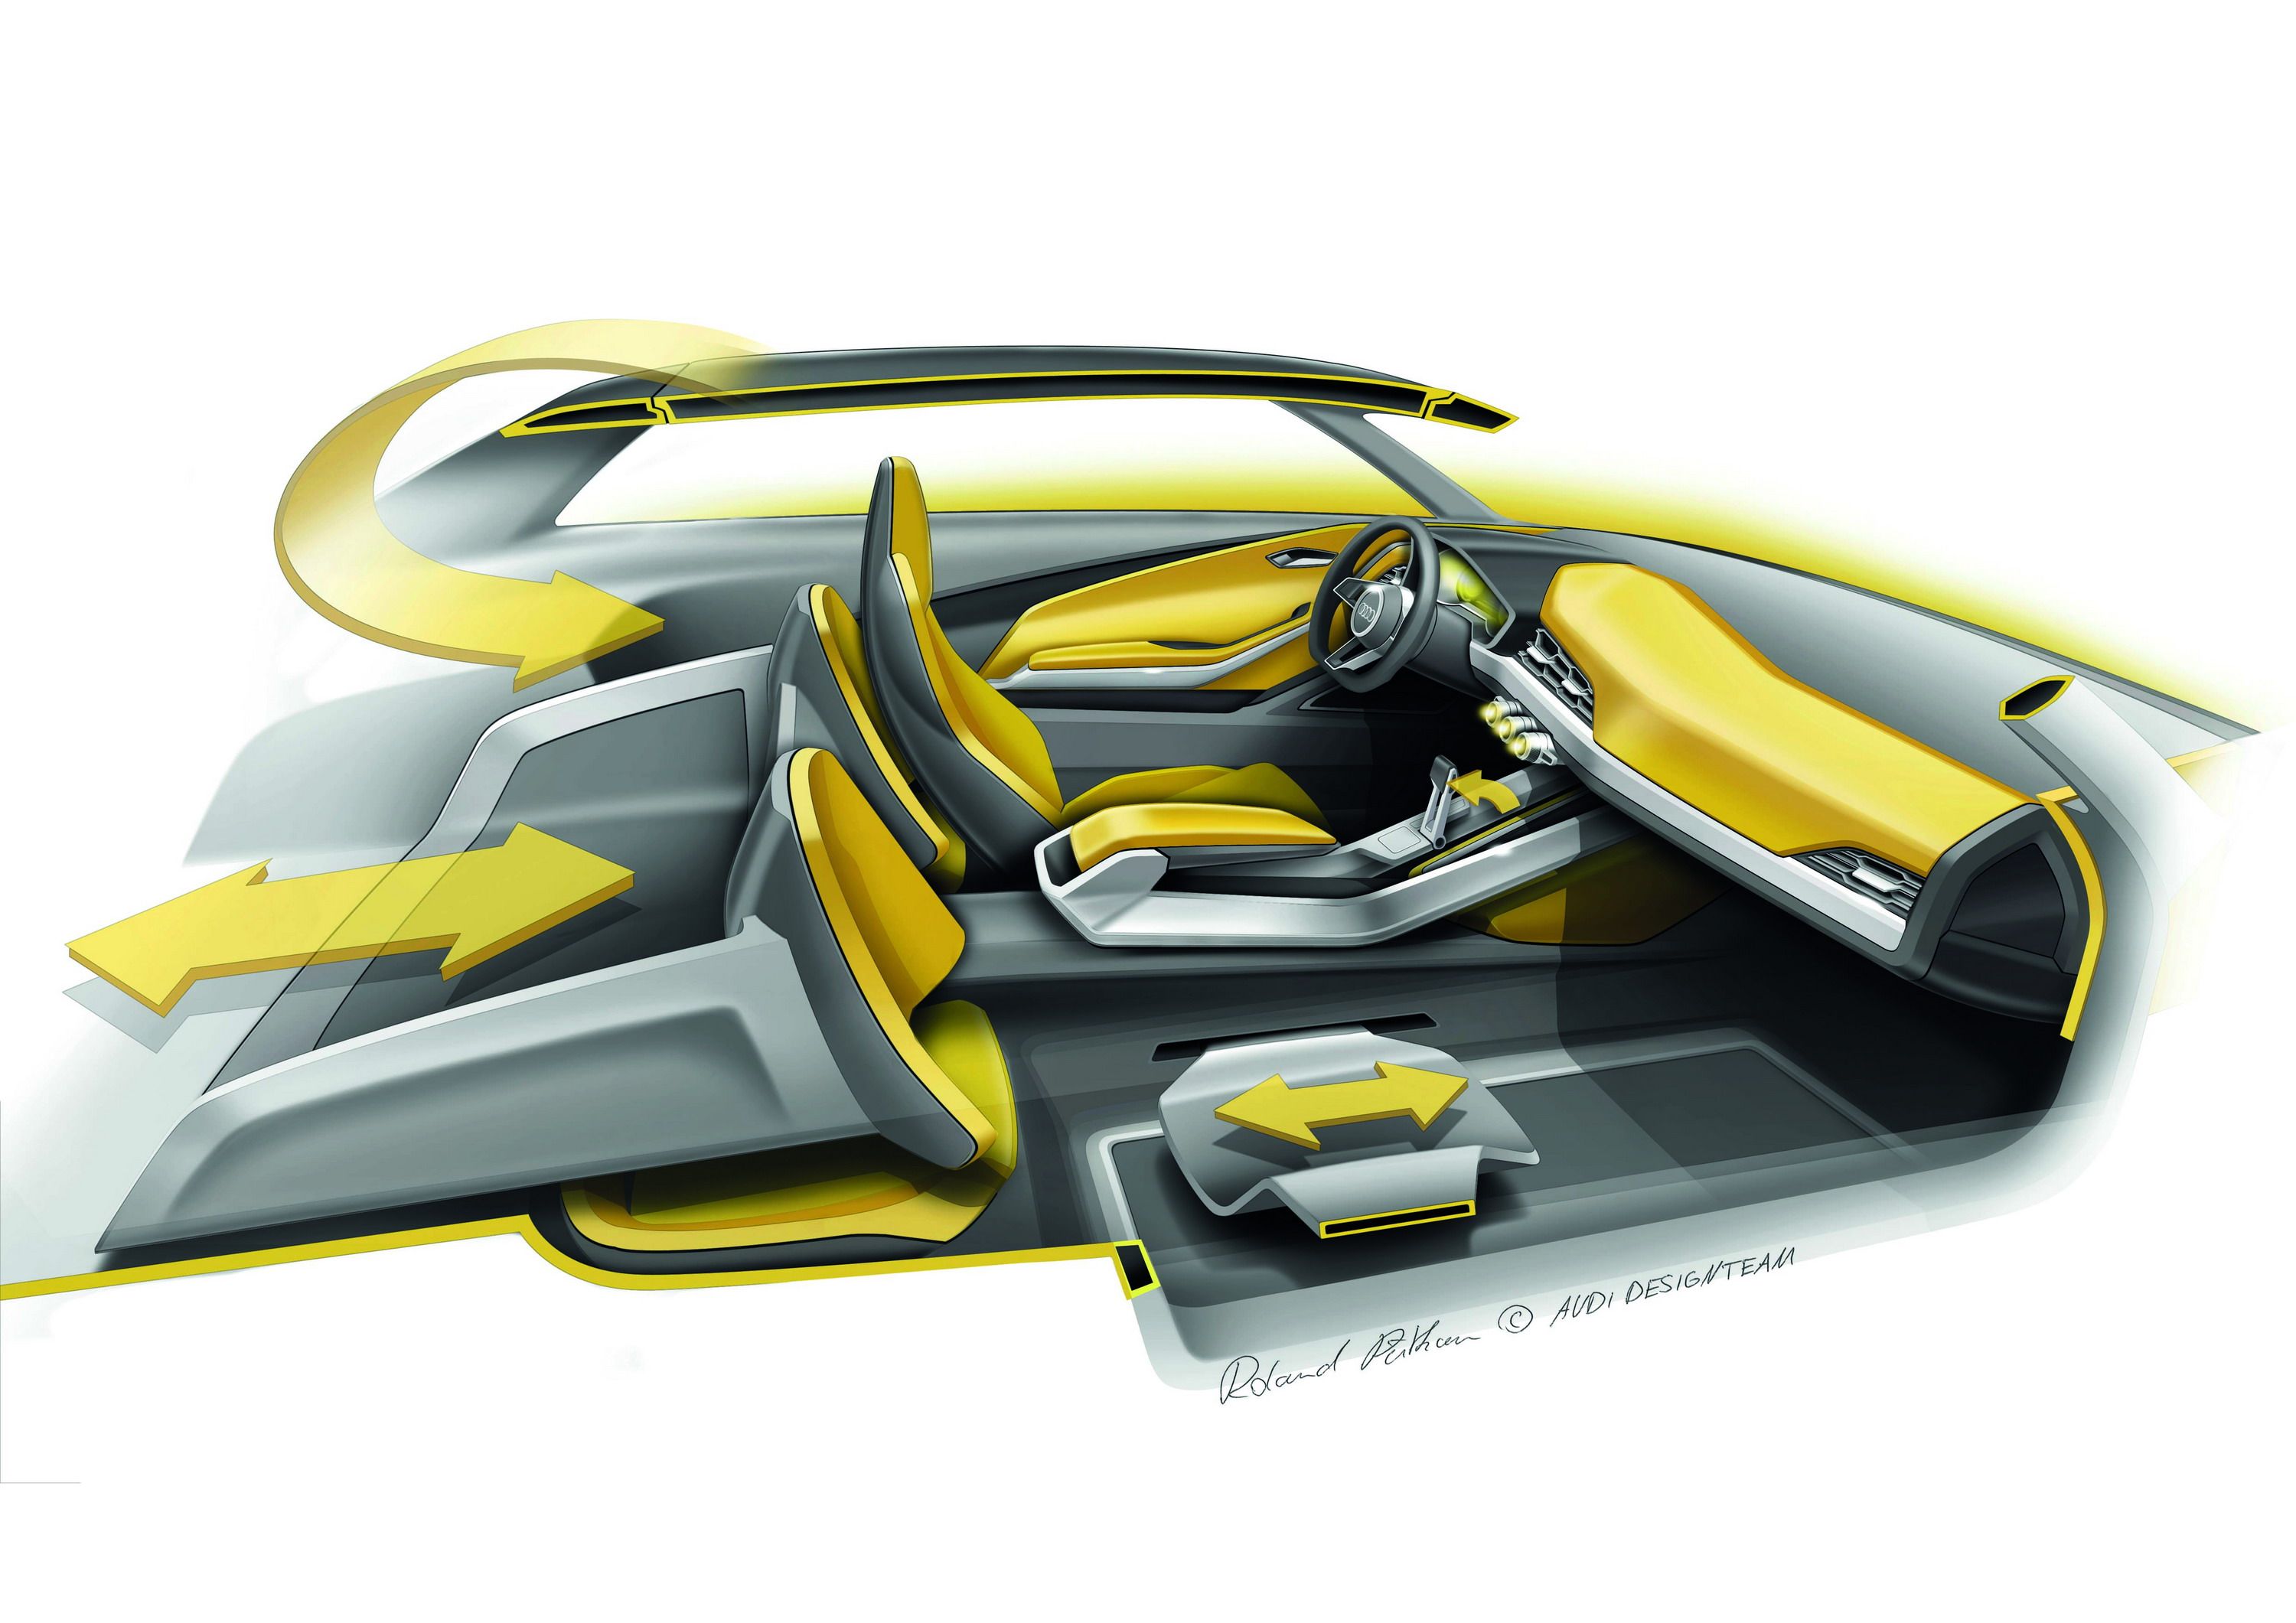 2012 Audi Crosslane Coupe Concept